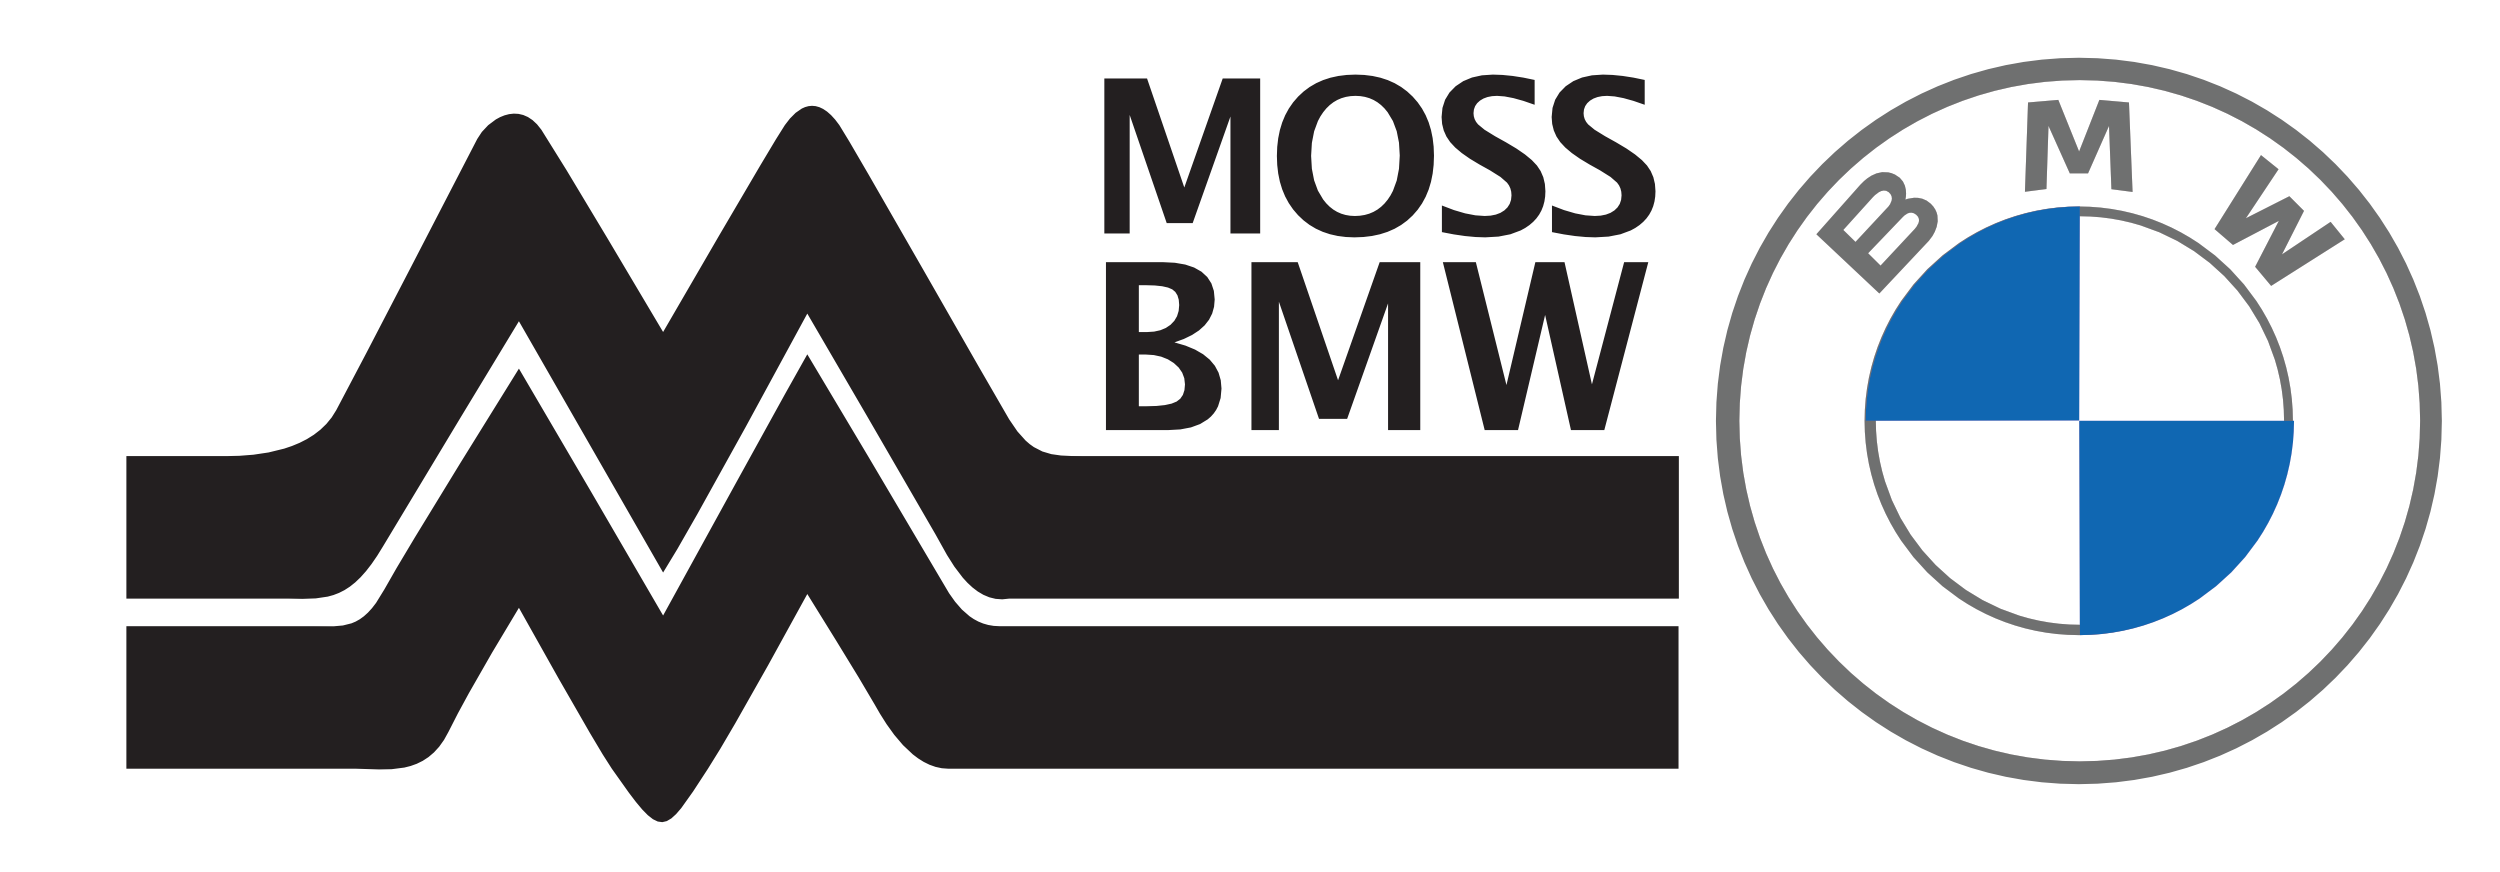 Moss BMW logo PNG